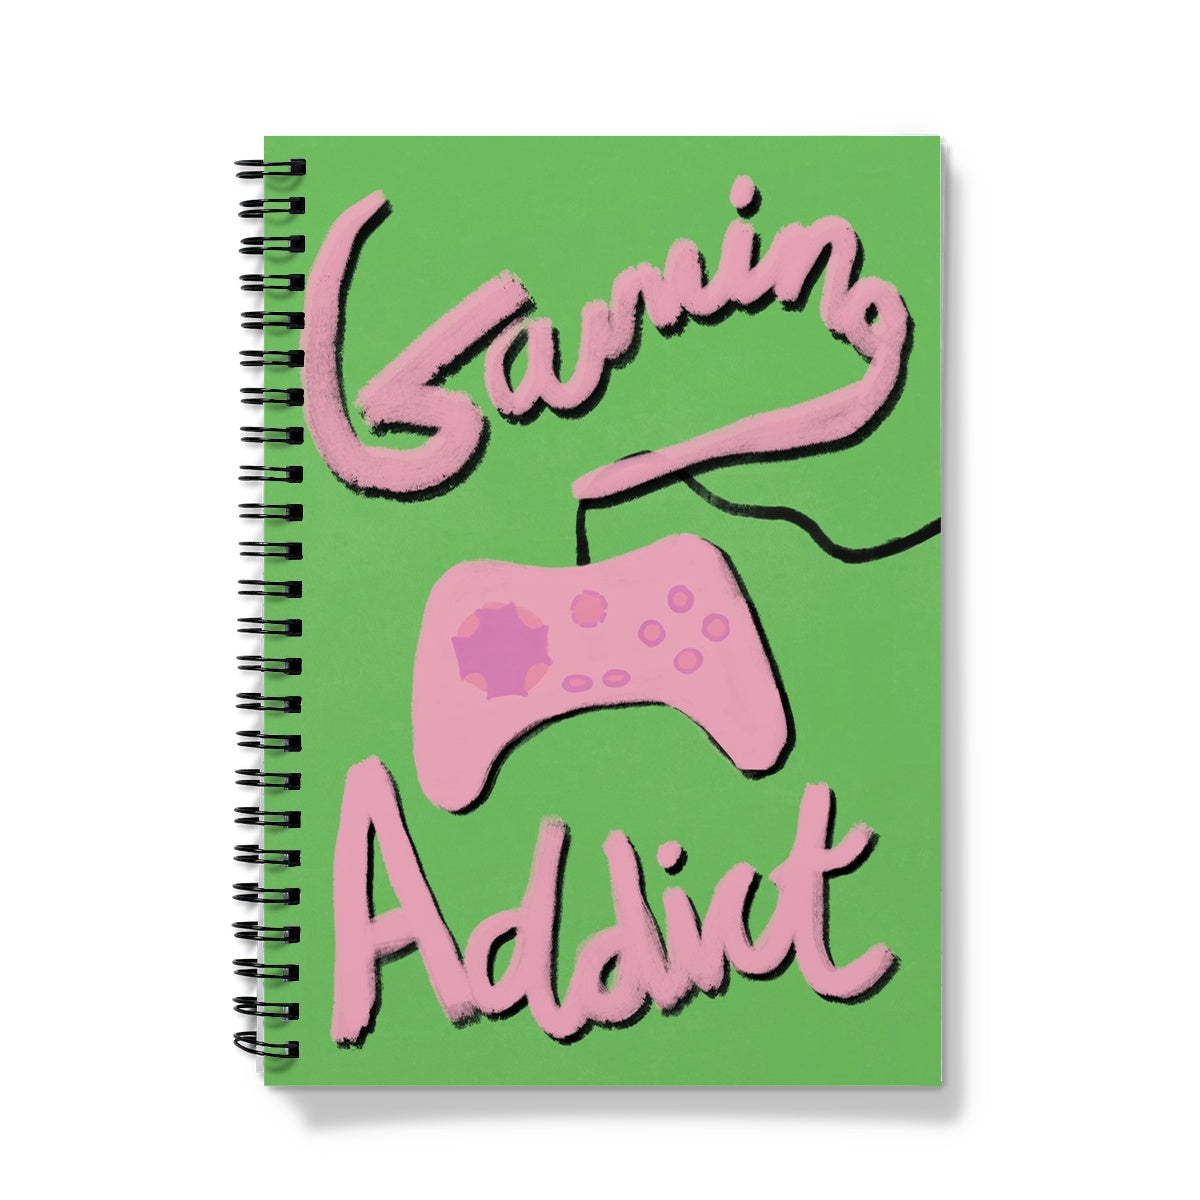 Gaming Addict Print - Green, Pink Notebook